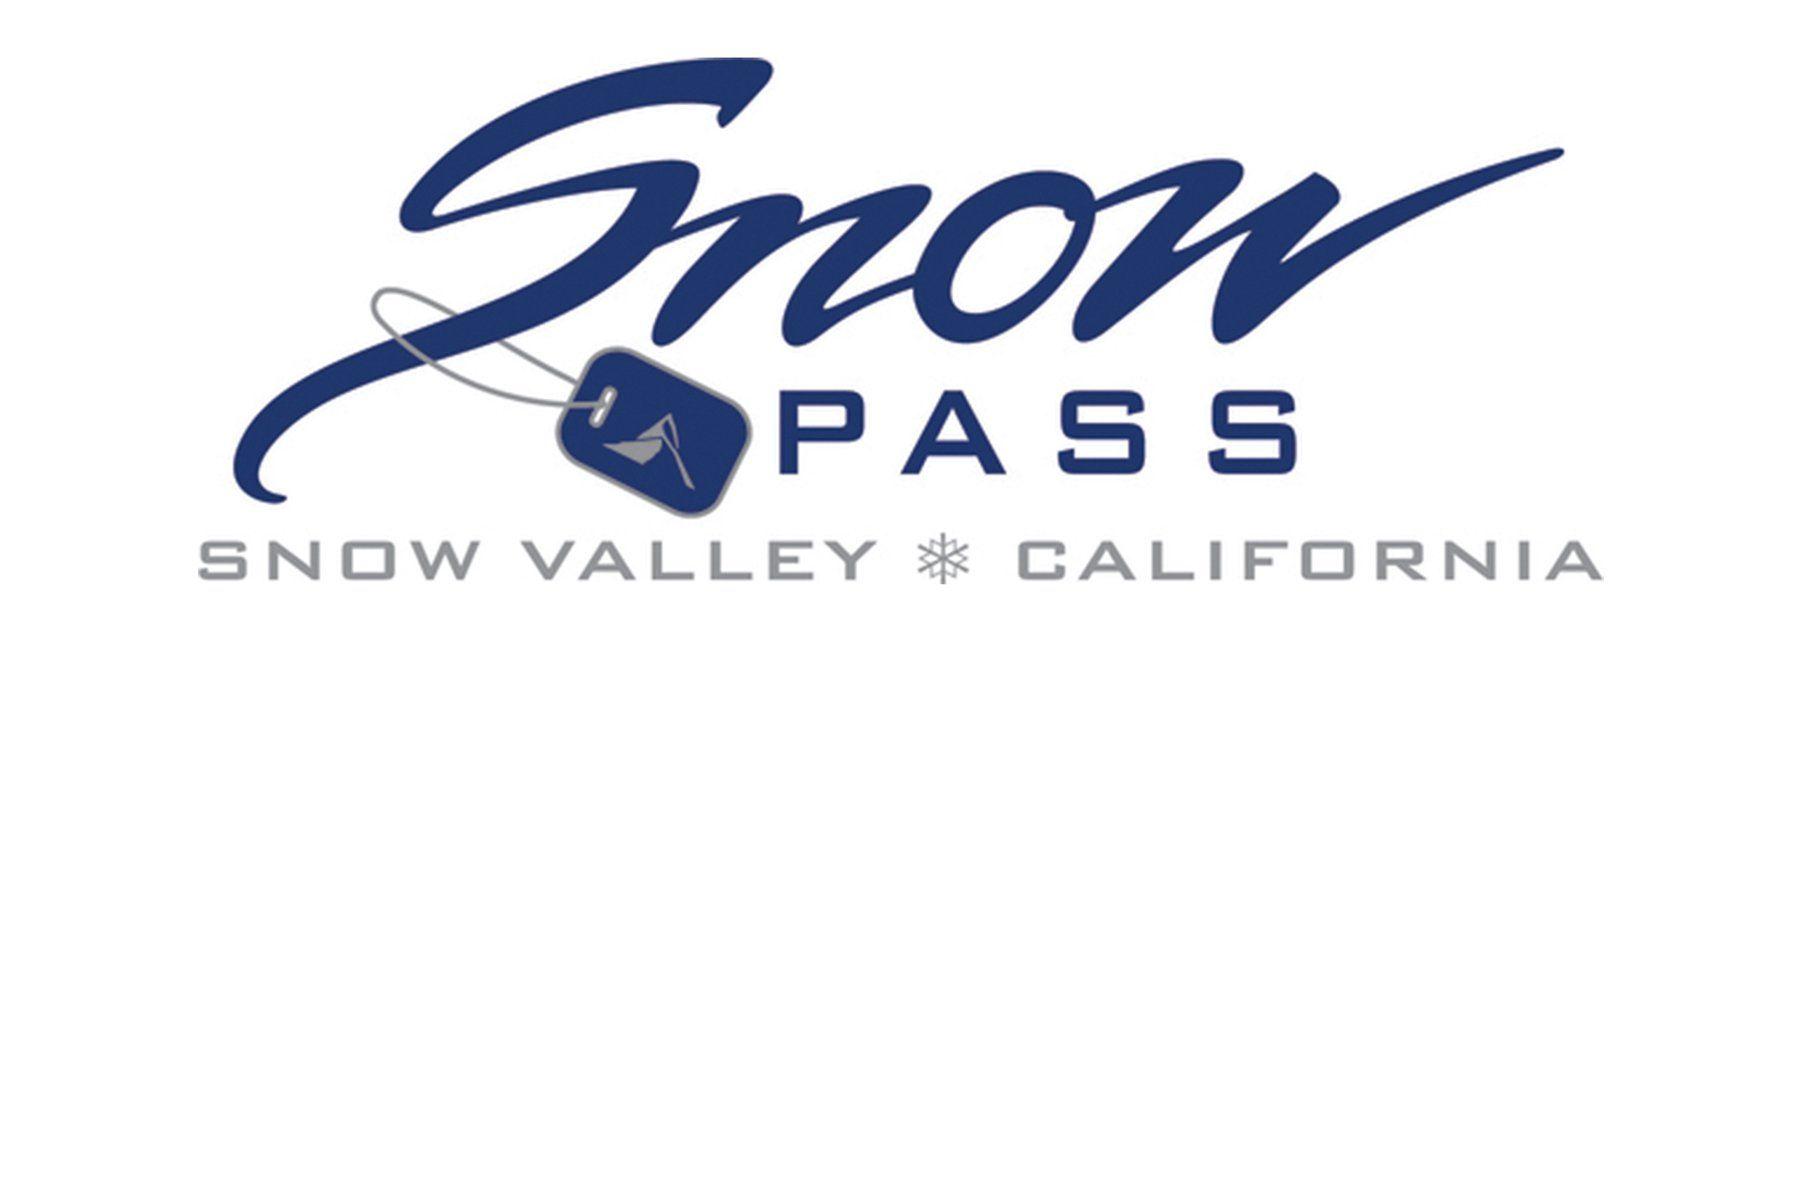 Pass Logo - The Snow Valley Snow Pass – Snow Valley